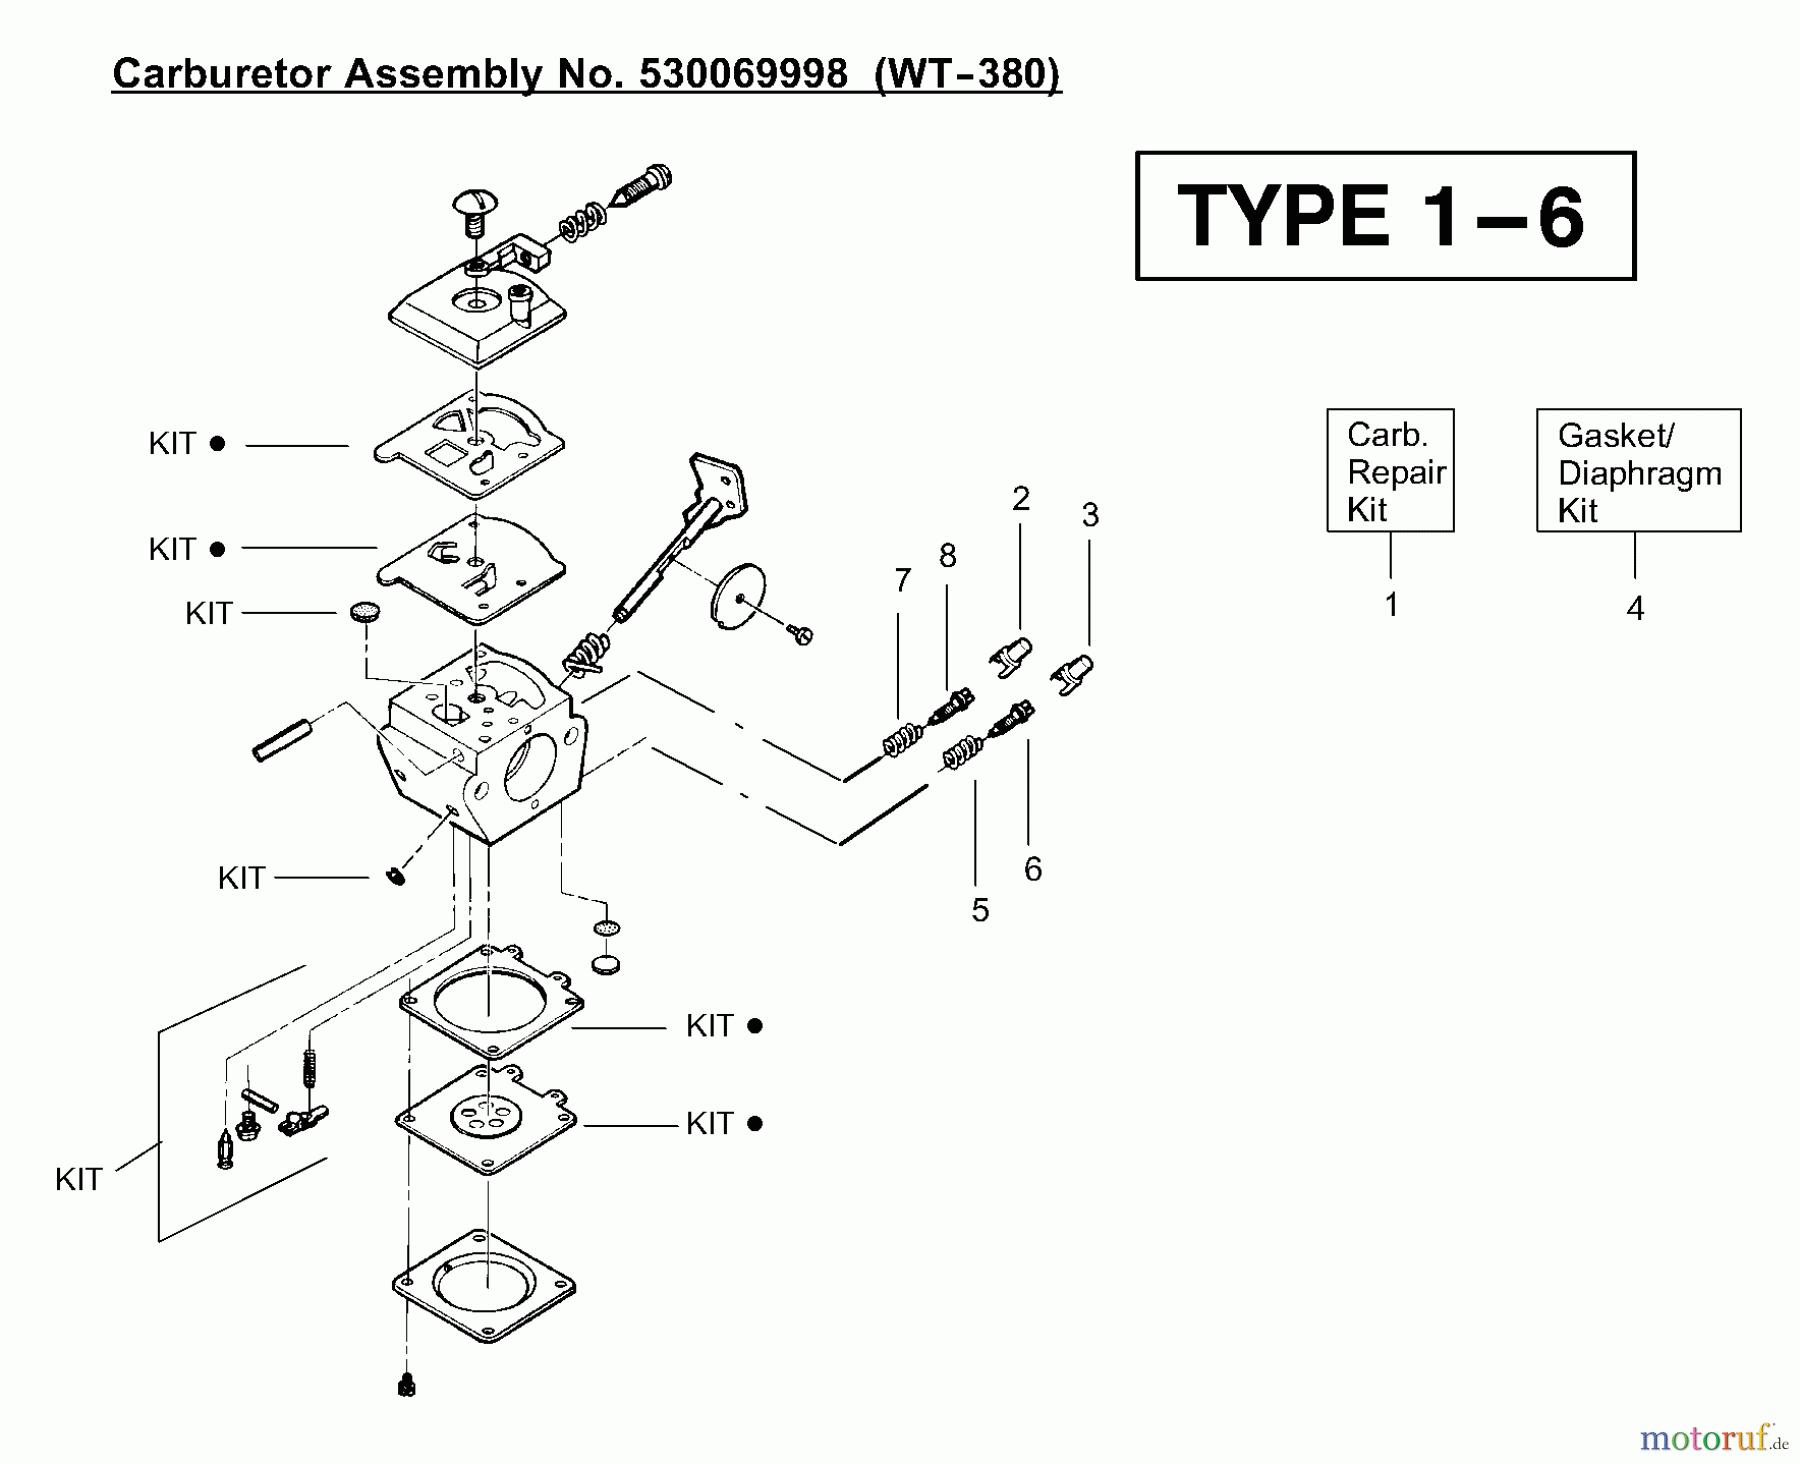  Poulan / Weed Eater Motorsensen, Trimmer BC2400 (Type 6) - Weed Eater String Trimmer Carburetor Assembly (WT380) 530069998